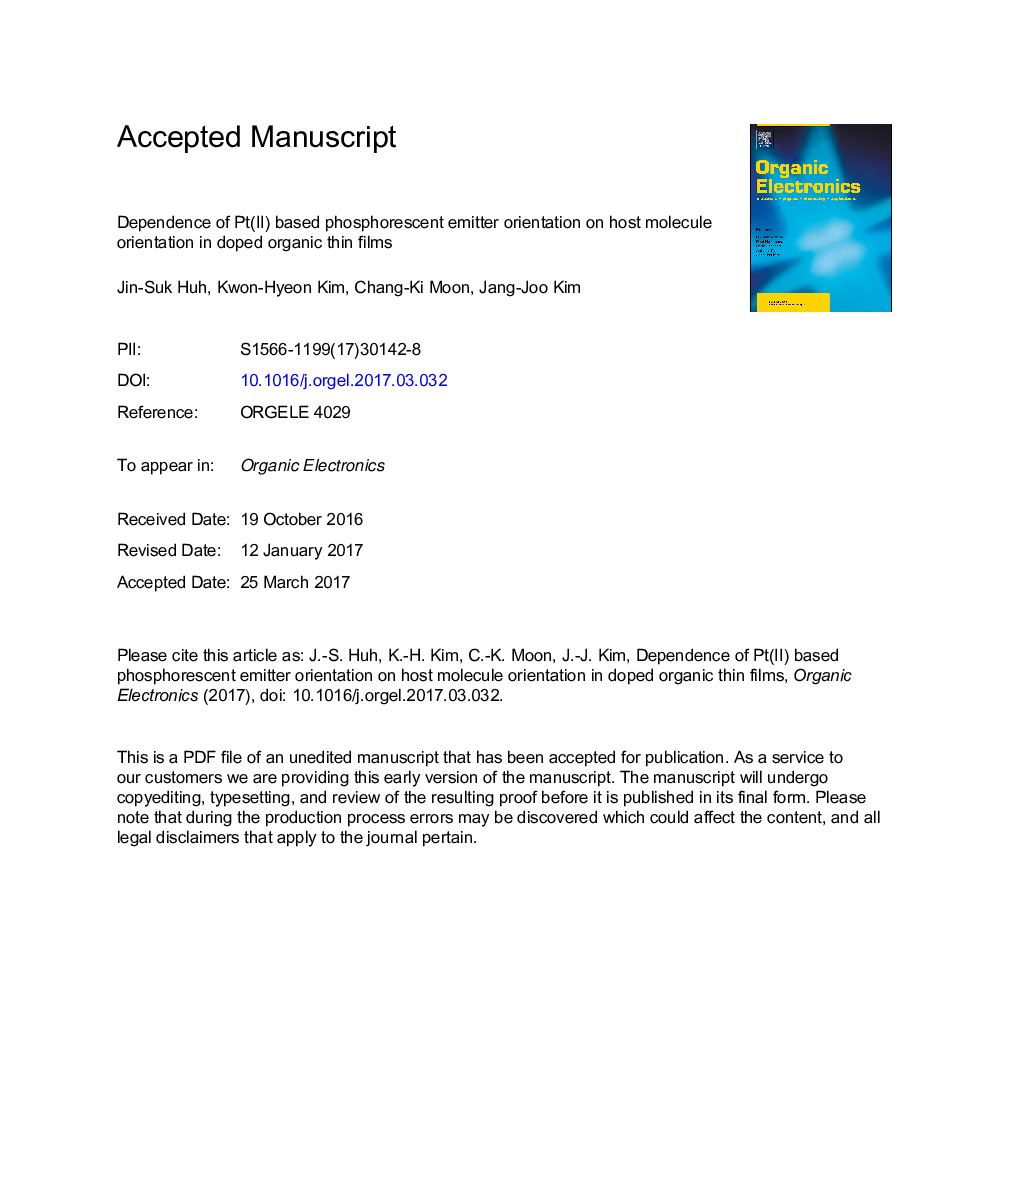 Dependence of Pt(II) based phosphorescent emitter orientation on host molecule orientation in doped organic thin films